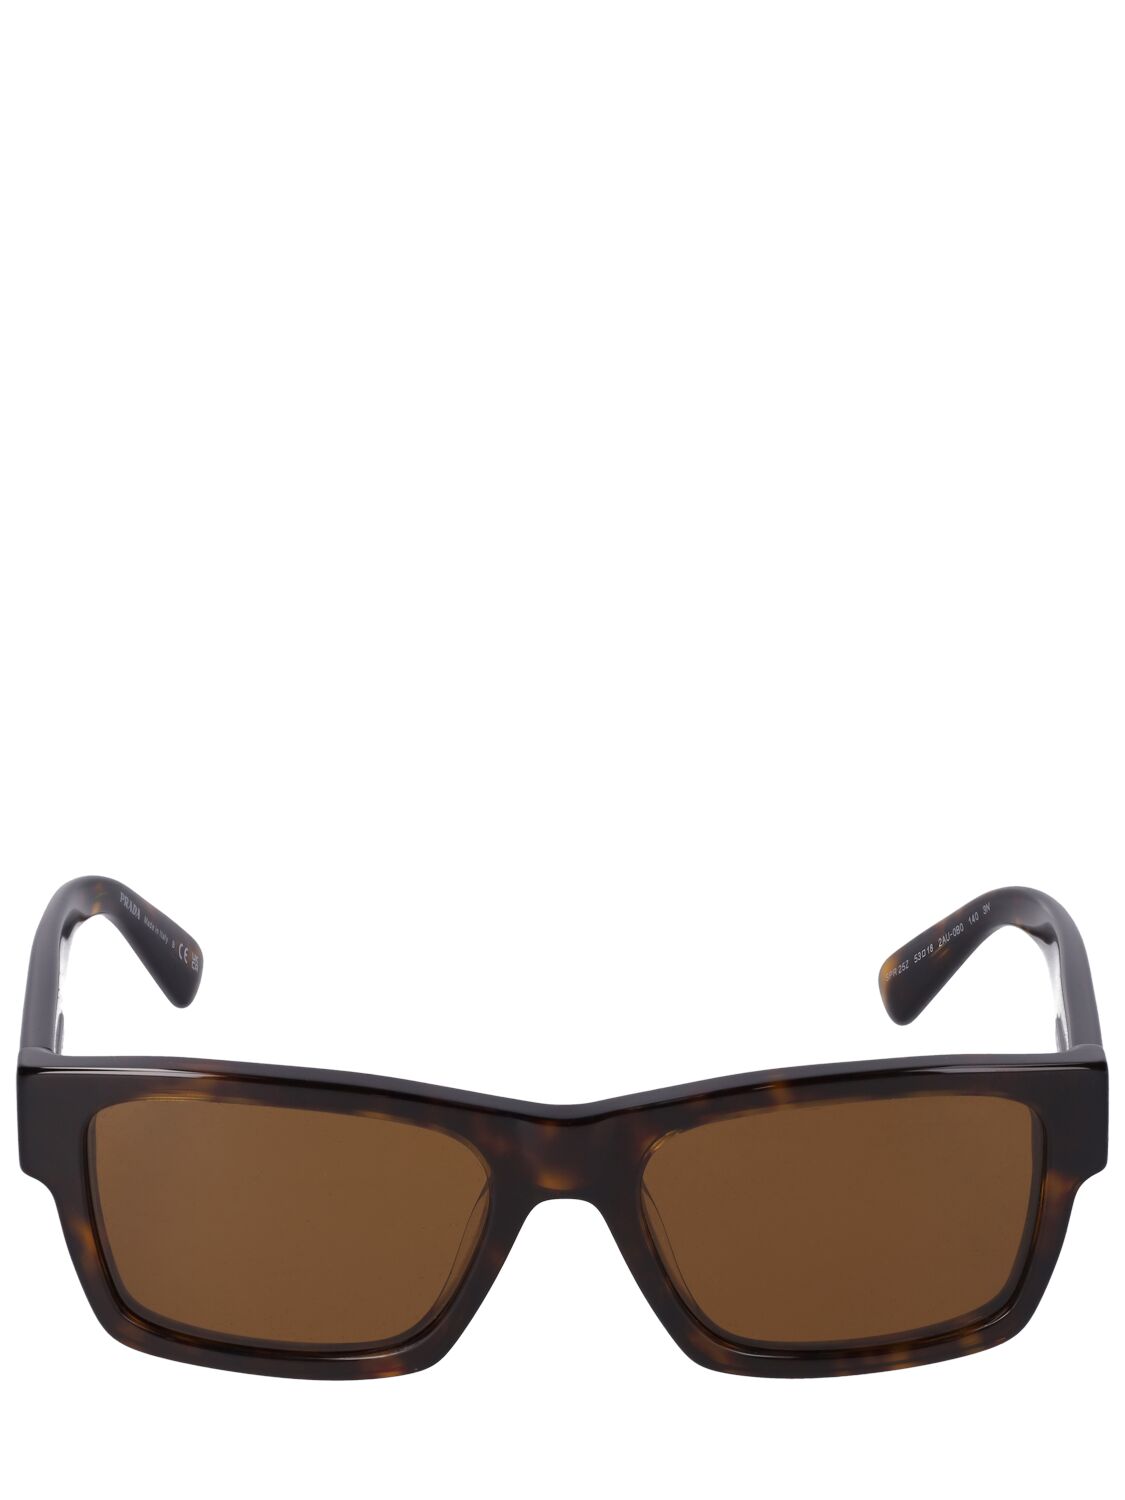 Image of Heritage Squared Acetate Sunglasses